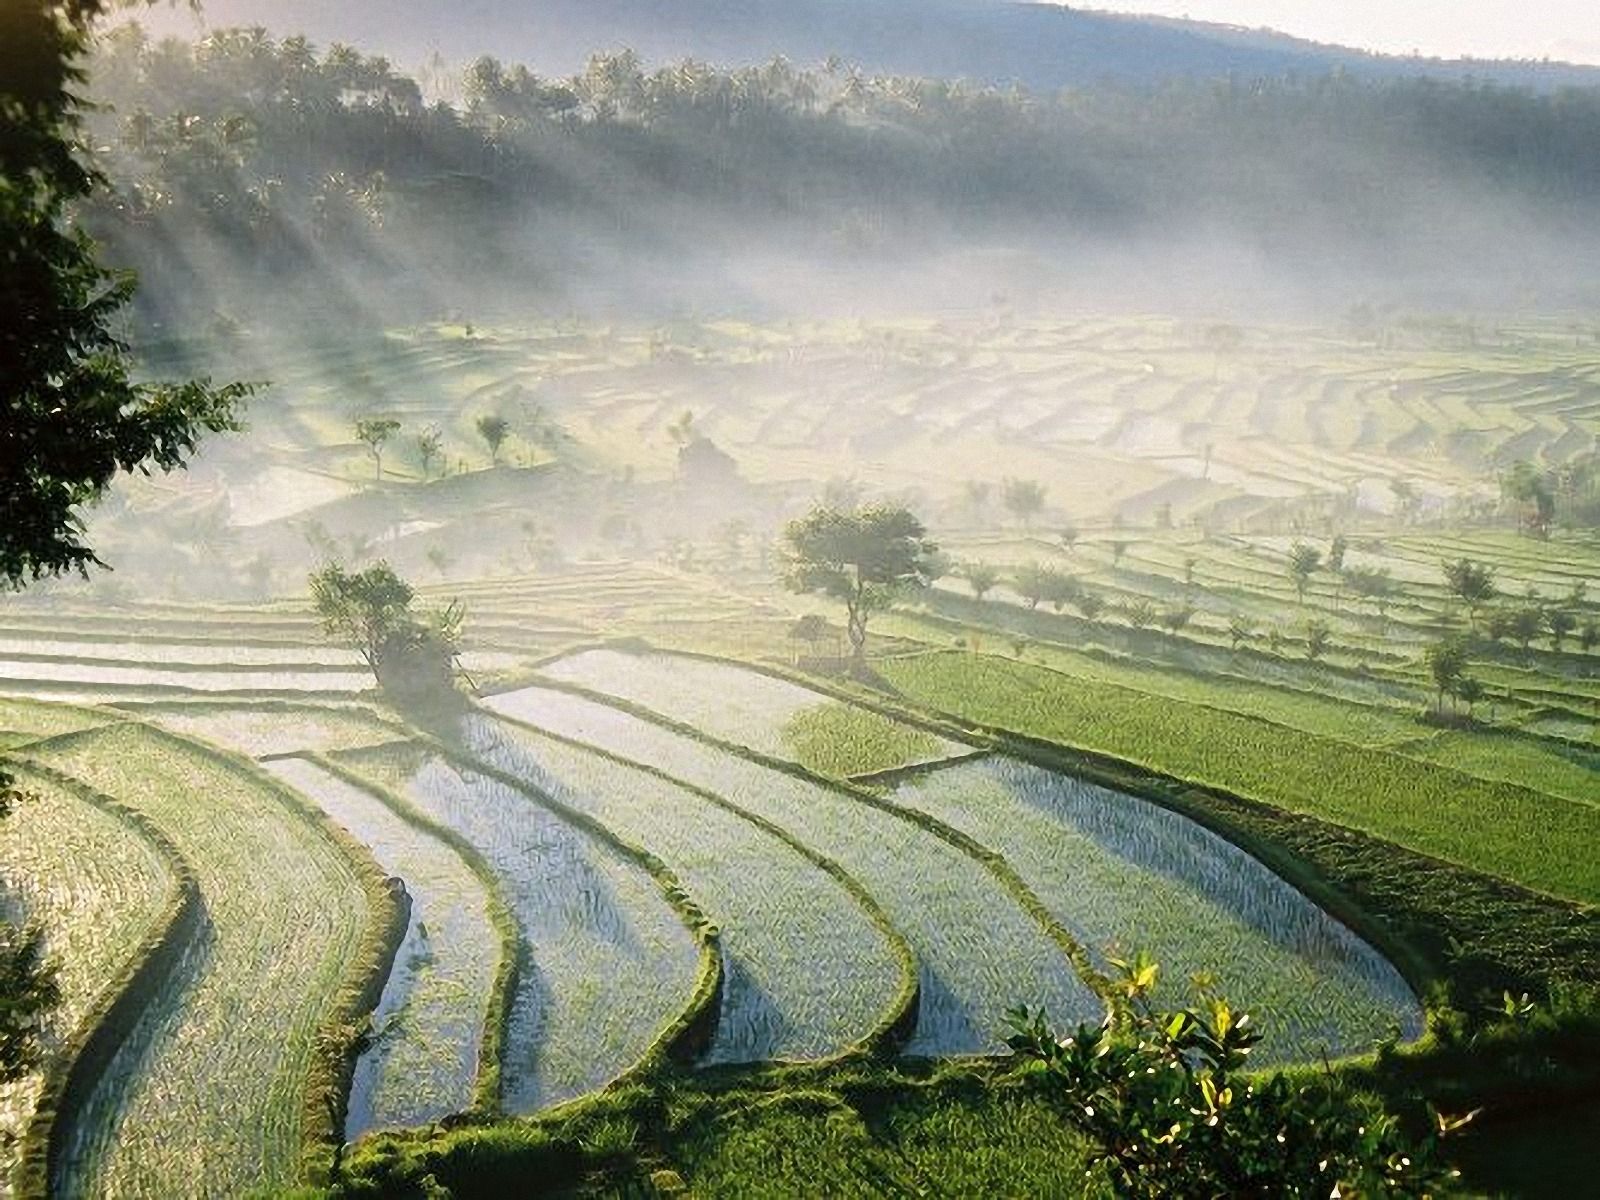  Bali Hintergrundbild 1600x1200. Bali Rice Fields wallpaper. Bali Rice Fields